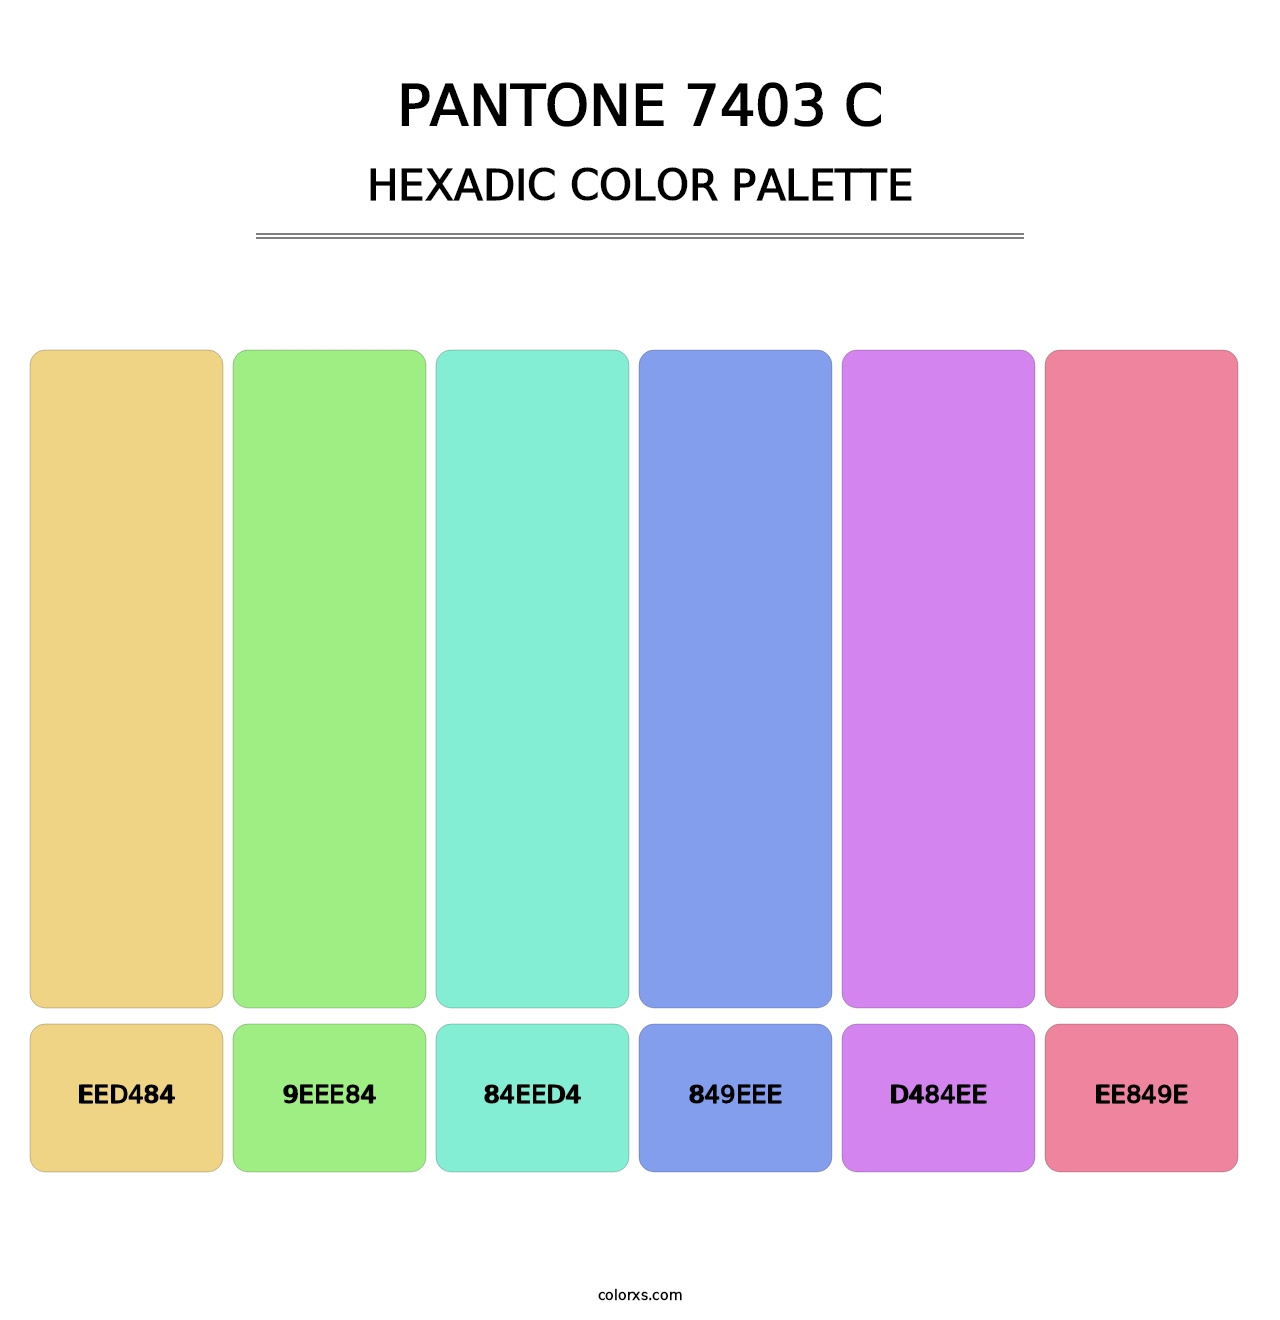 PANTONE 7403 C - Hexadic Color Palette